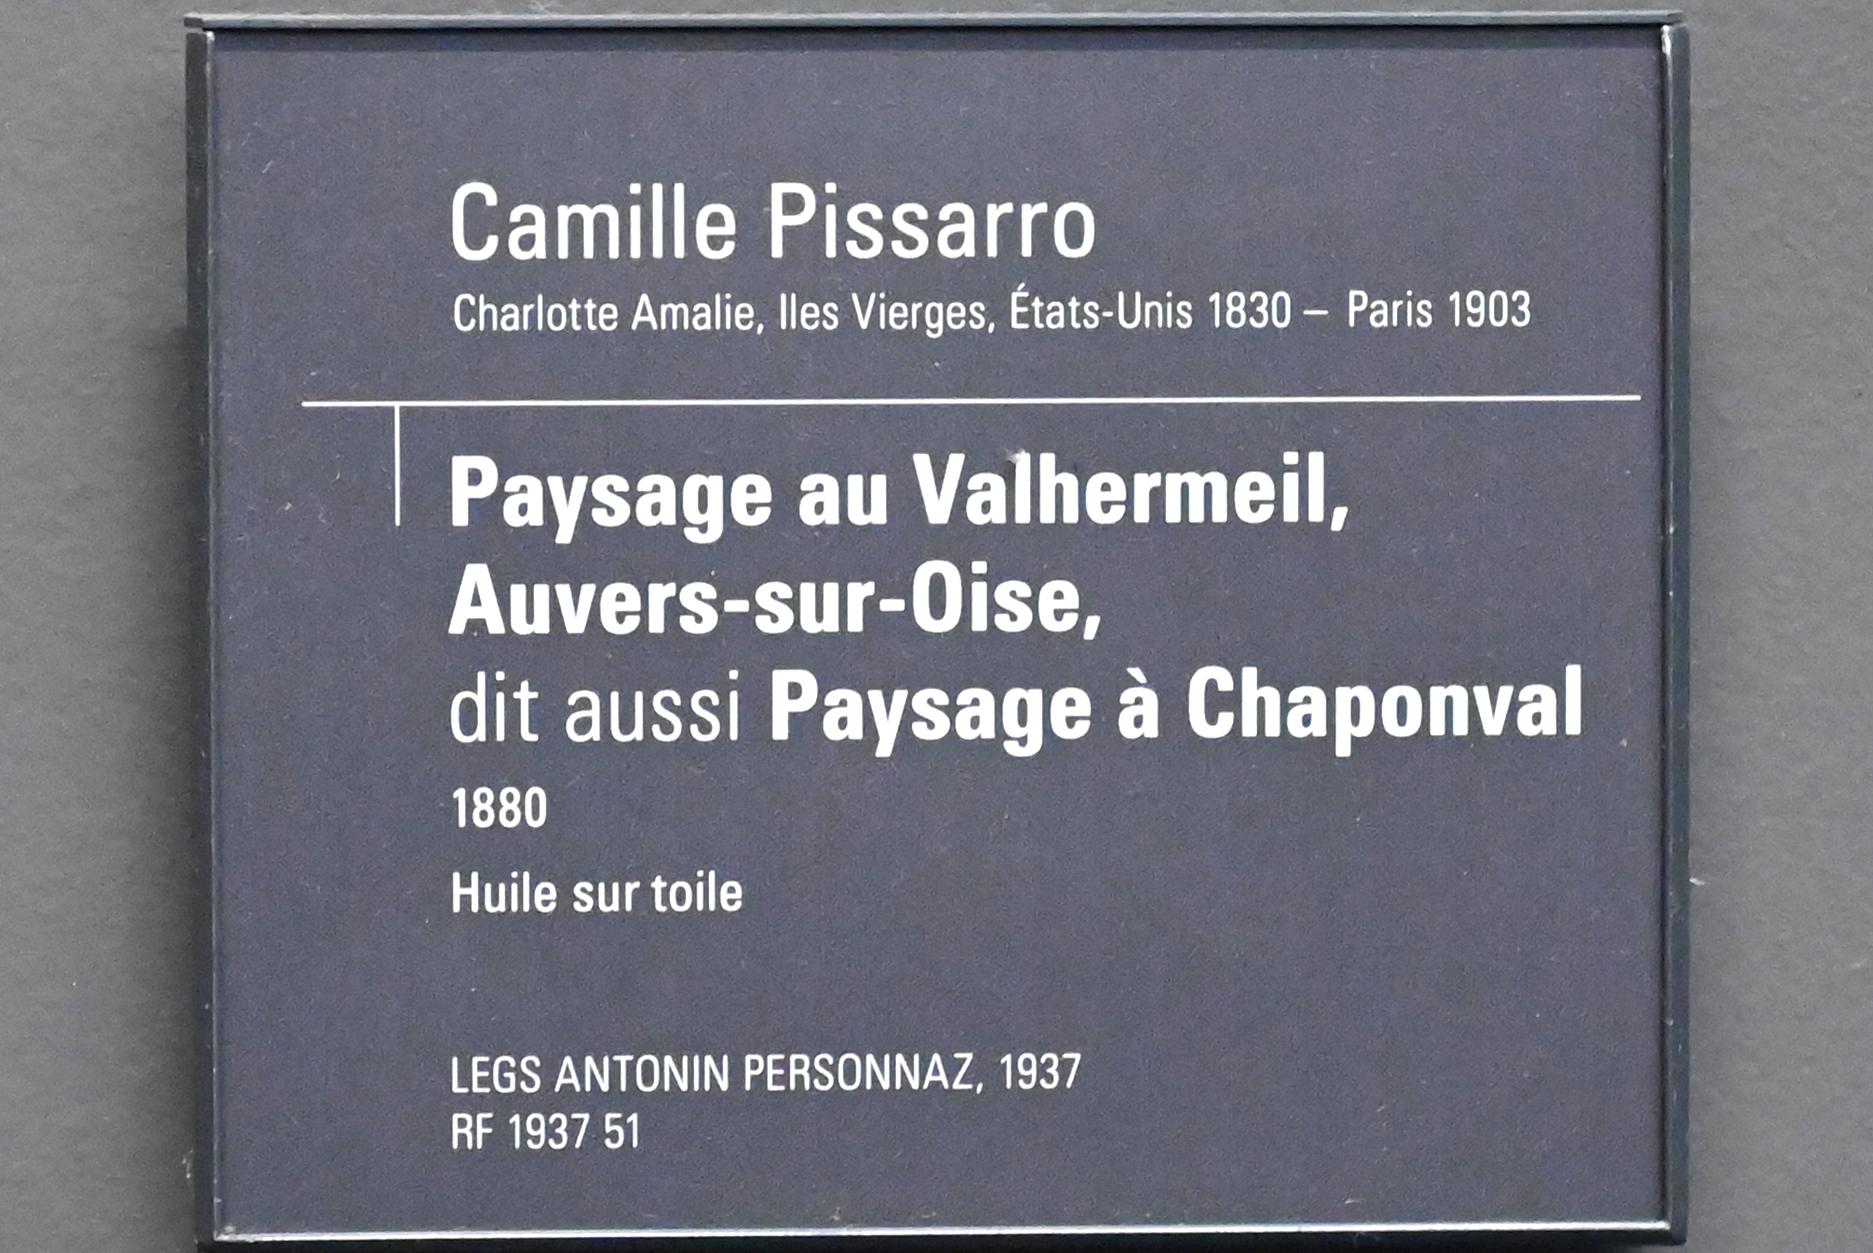 Camille Pissarro (1863–1903), Landschaft bei Valhermeil in Auvers-sur-Oise (Landschaft bei Chaponval), Paris, Musée d’Orsay, 1880, Bild 2/2